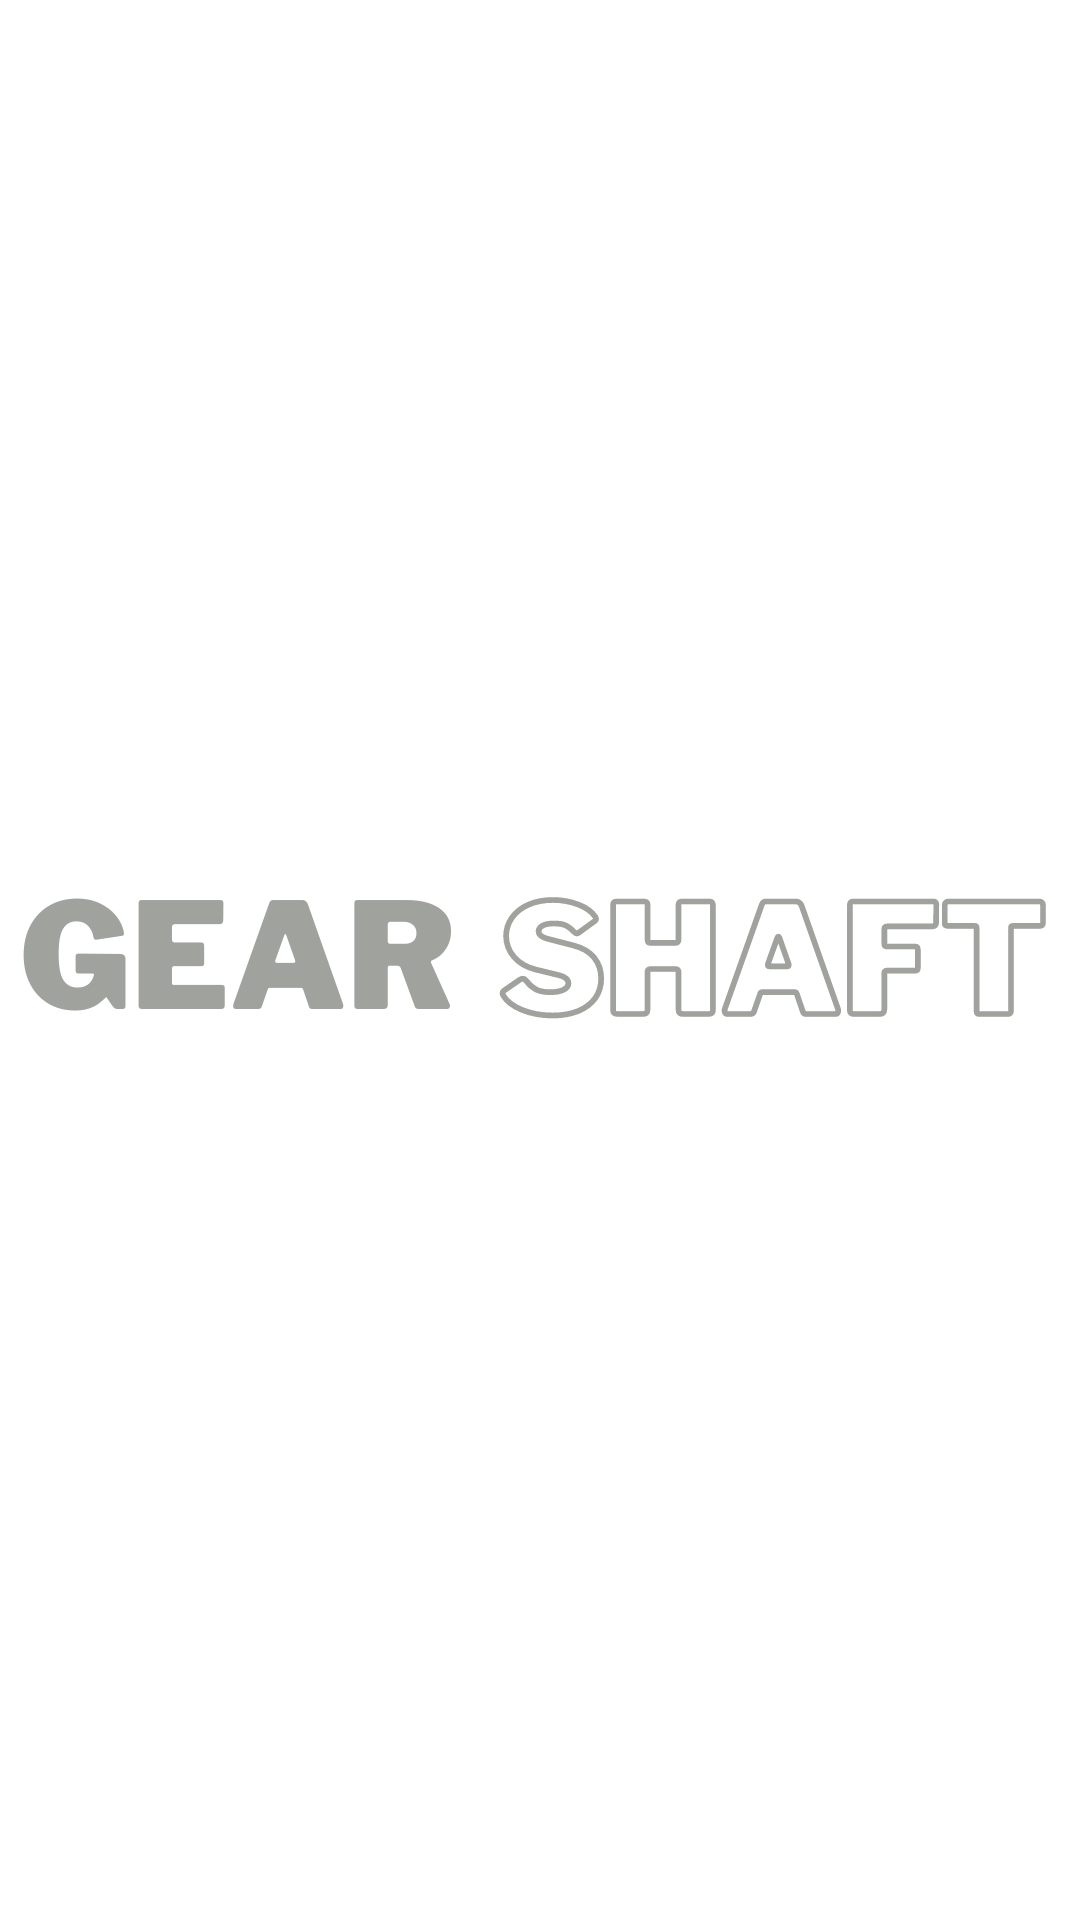 Gear Shaft Title